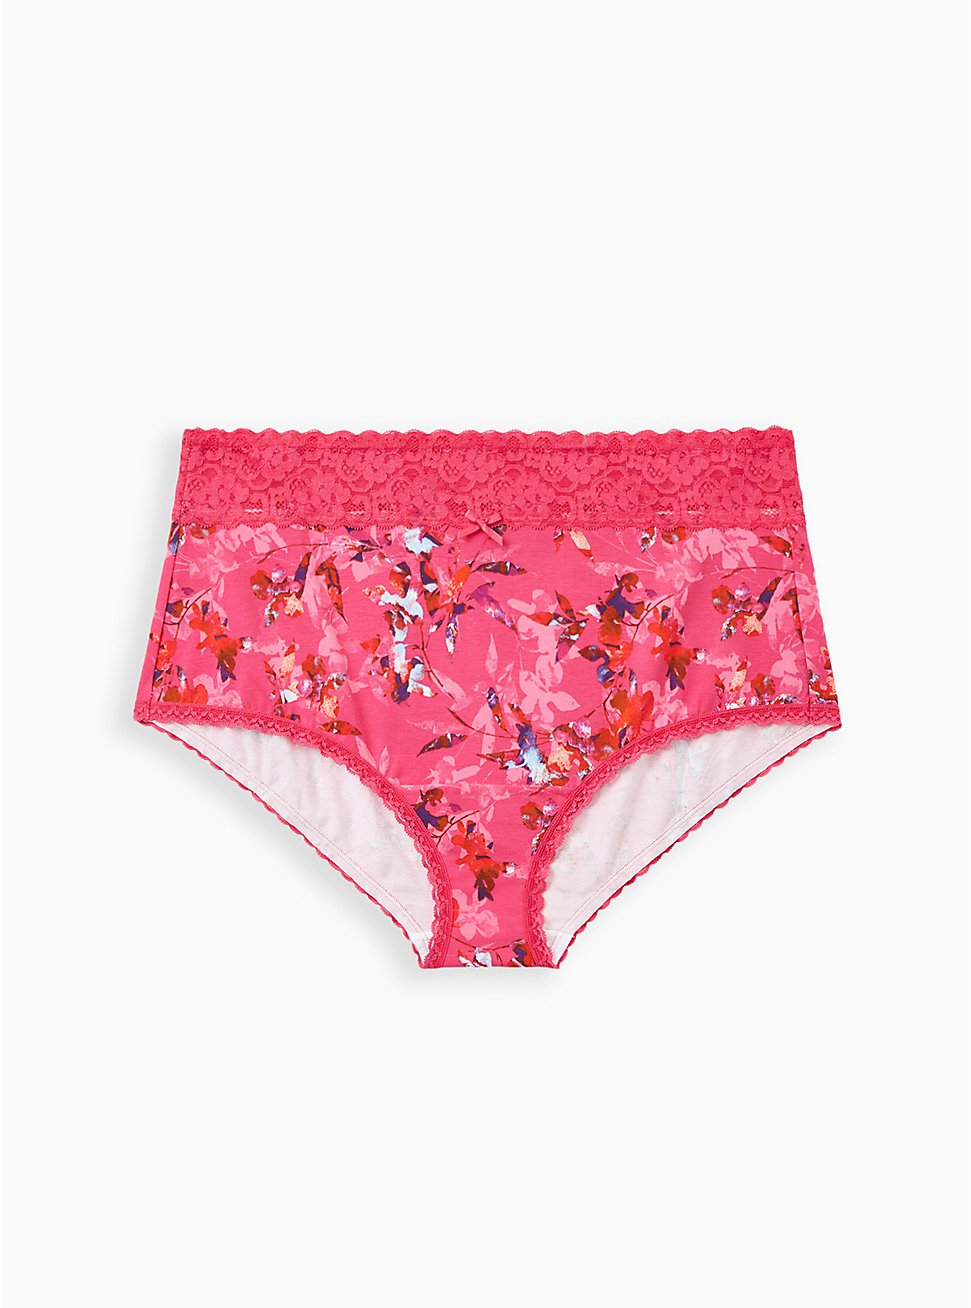 Plus Size Pink Floral Wide Lace Cotton Brief Panty, Light Forest Floral- PINK, hi-res